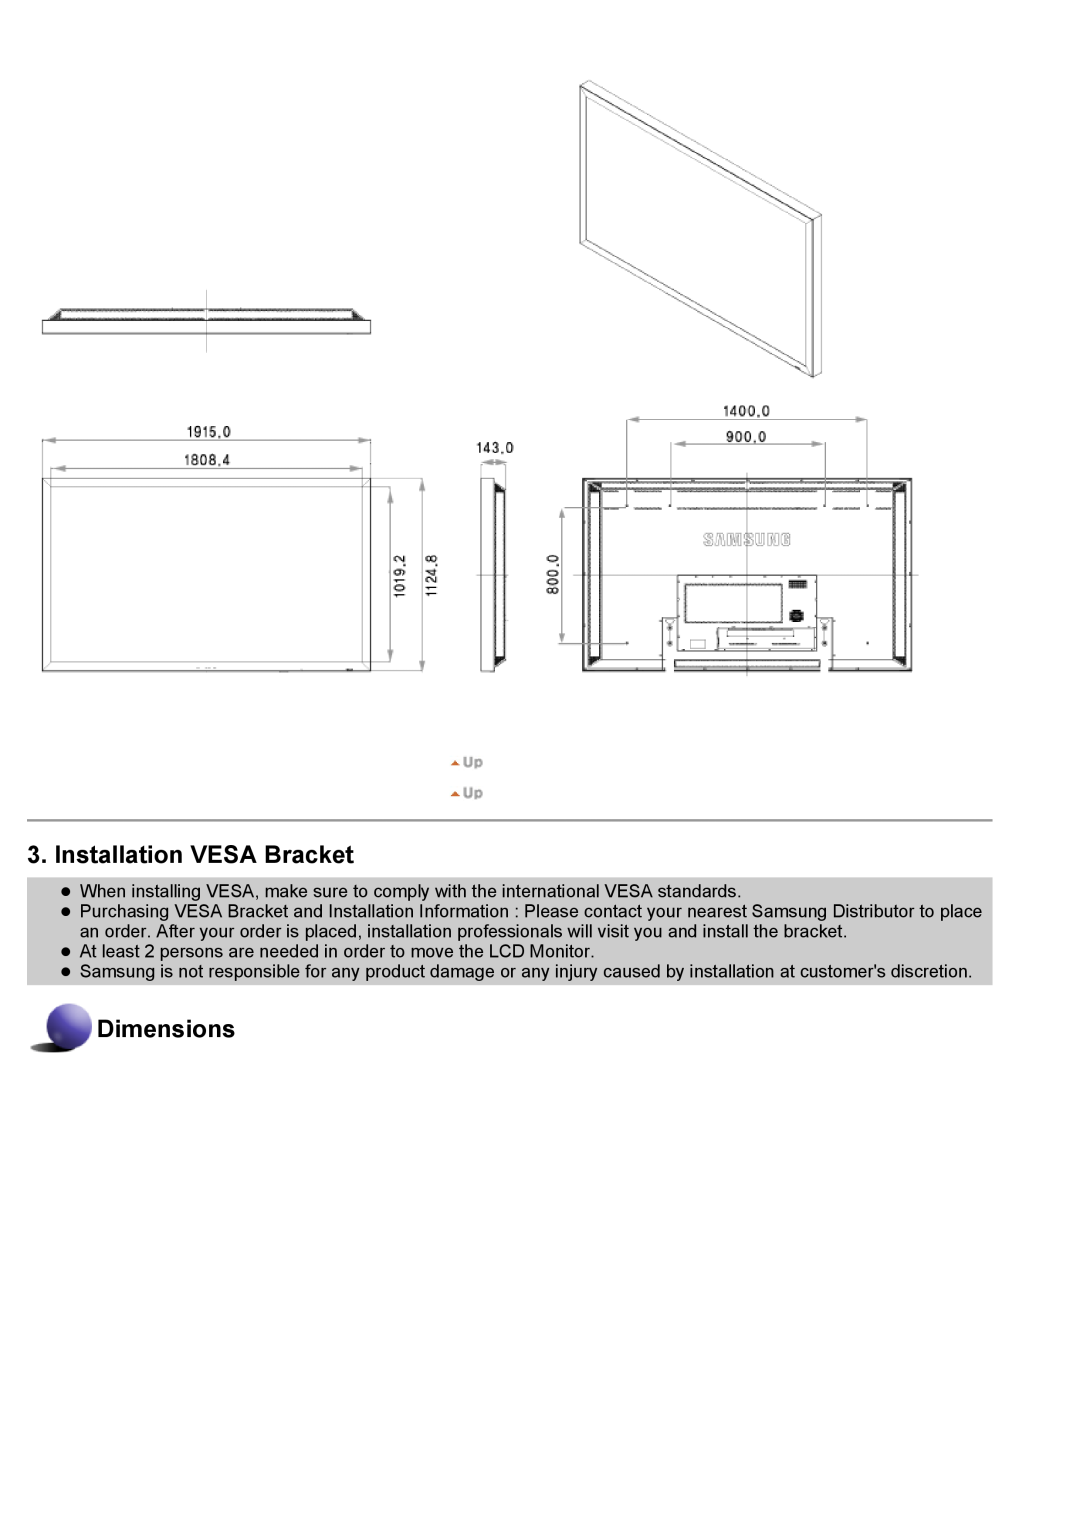 Samsung 700DXn, 820DXN specifications Installation VESA Bracket, Dimensions 